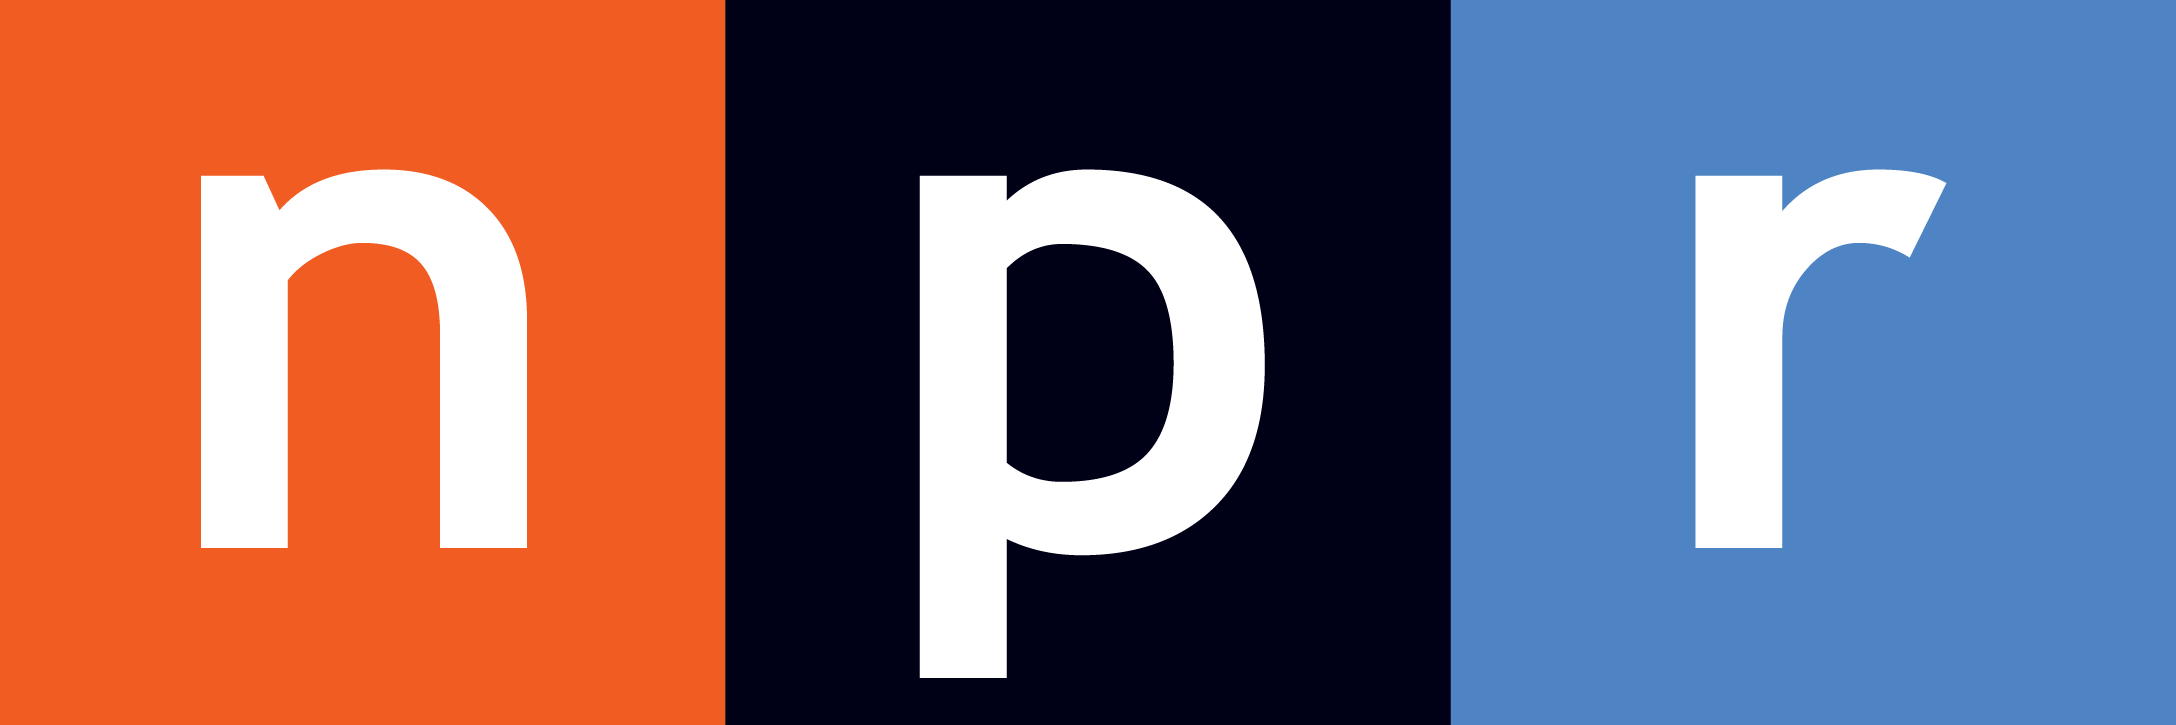 NPR Logo - Logos